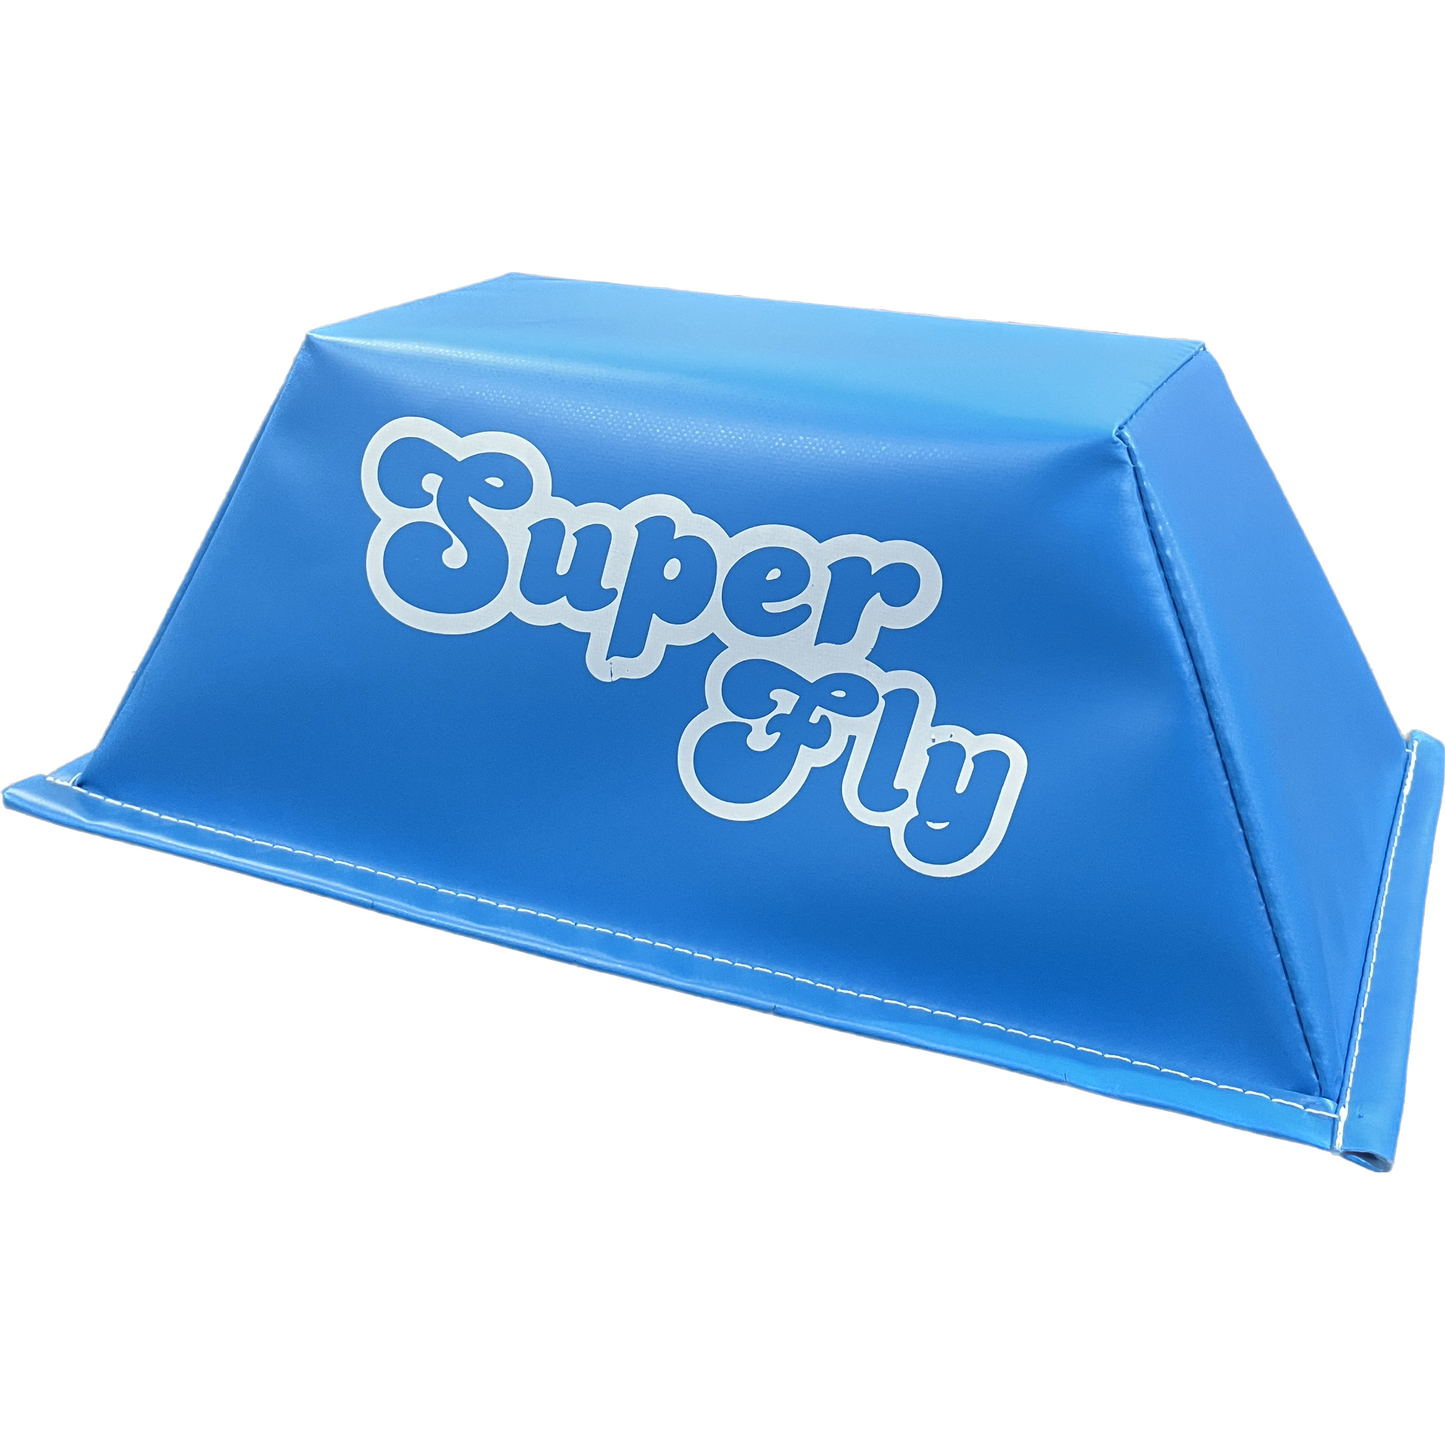 SuperFly Cheer Stunt Block